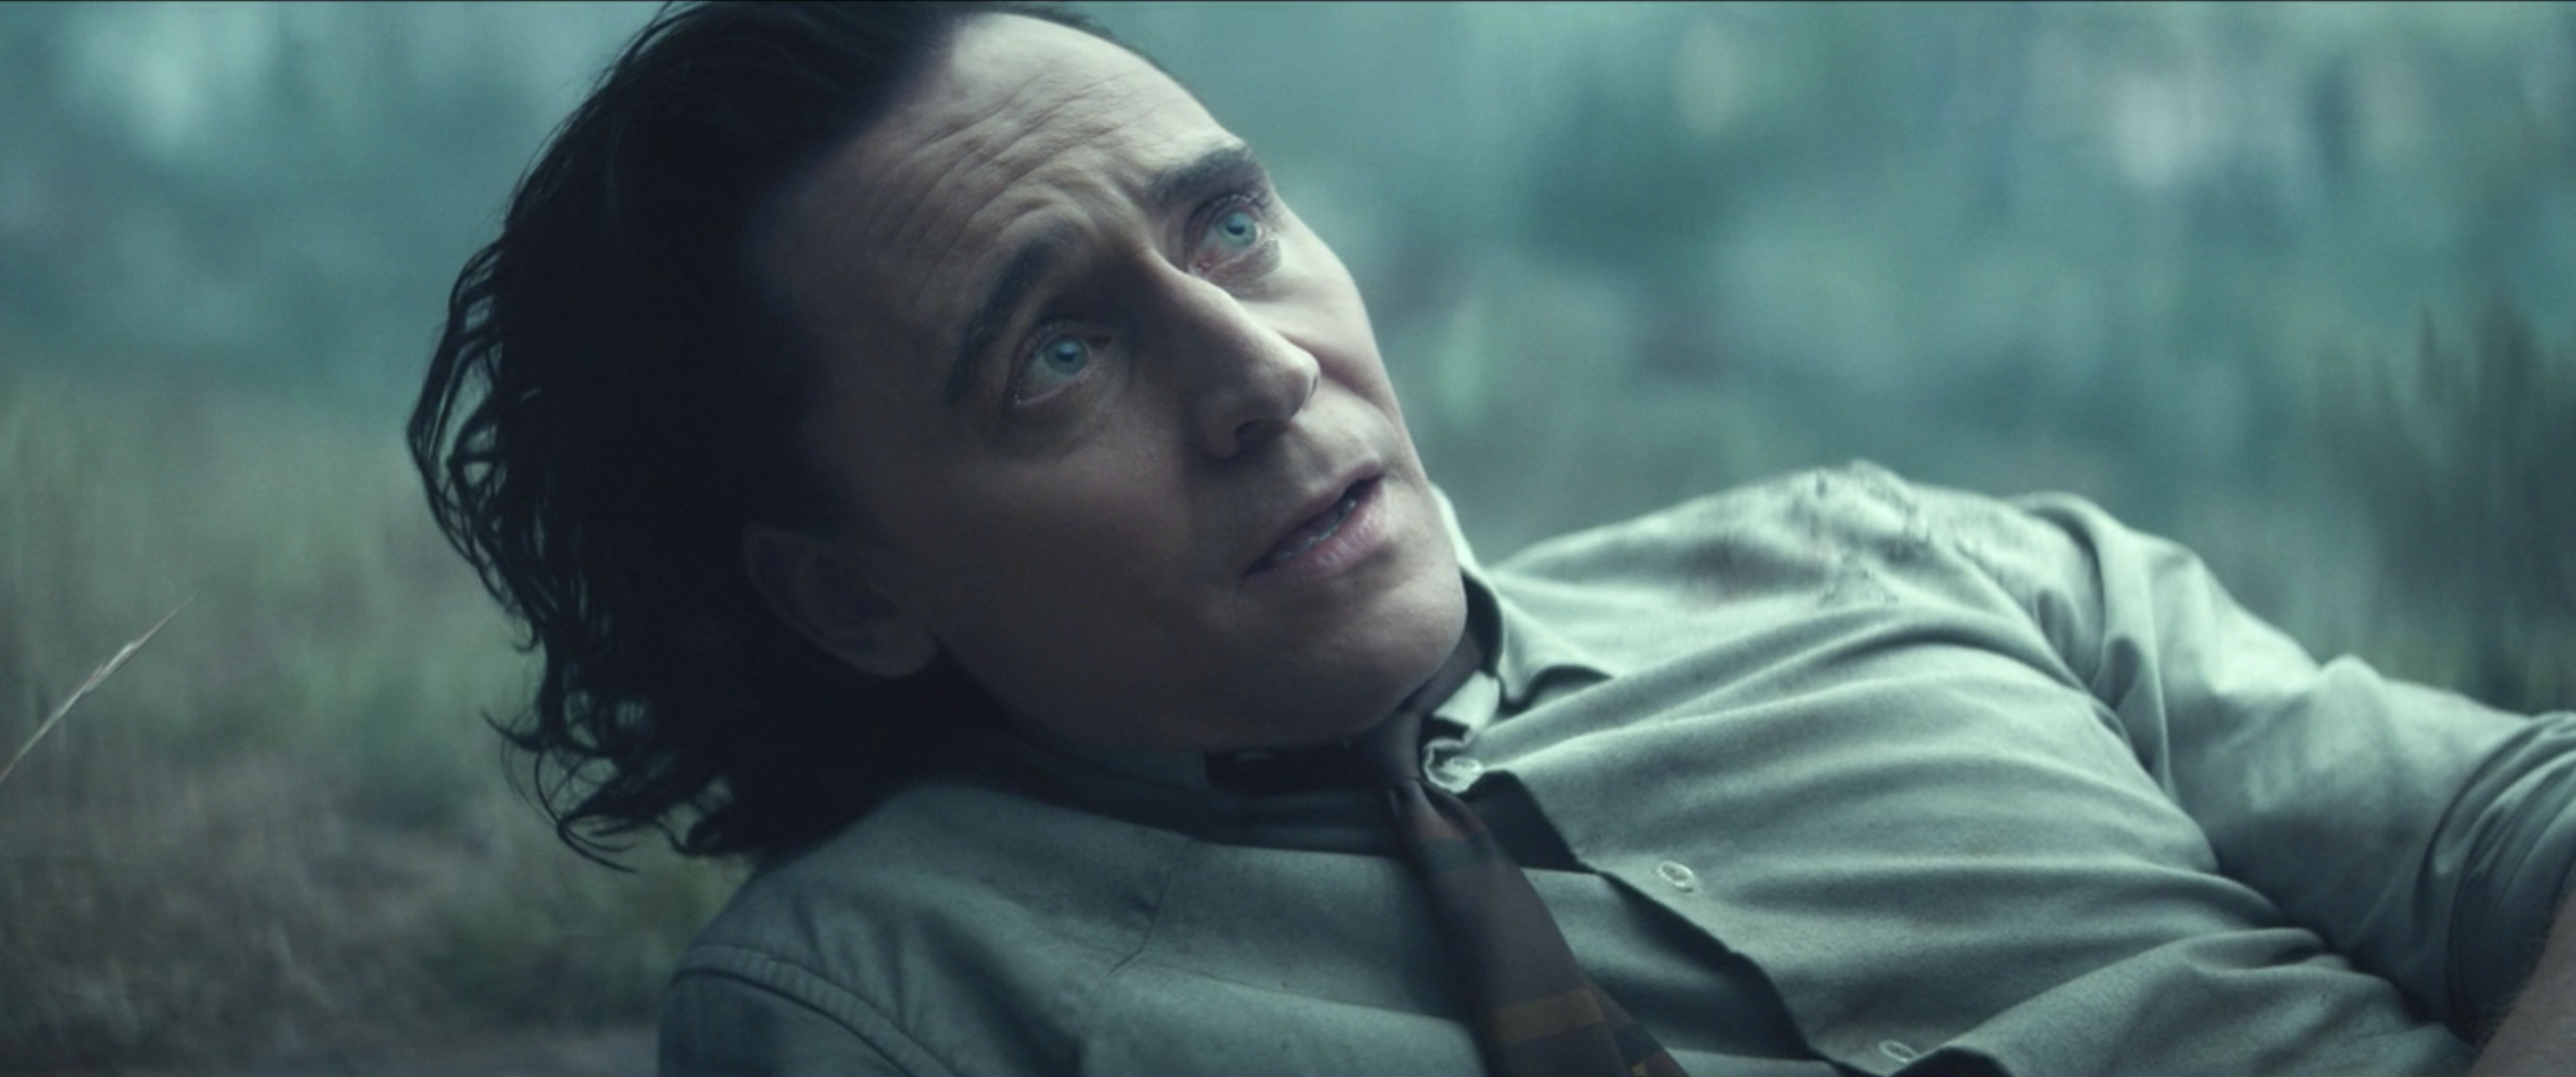 Yom Hiddleston's Loki on the ground, looking distraught.